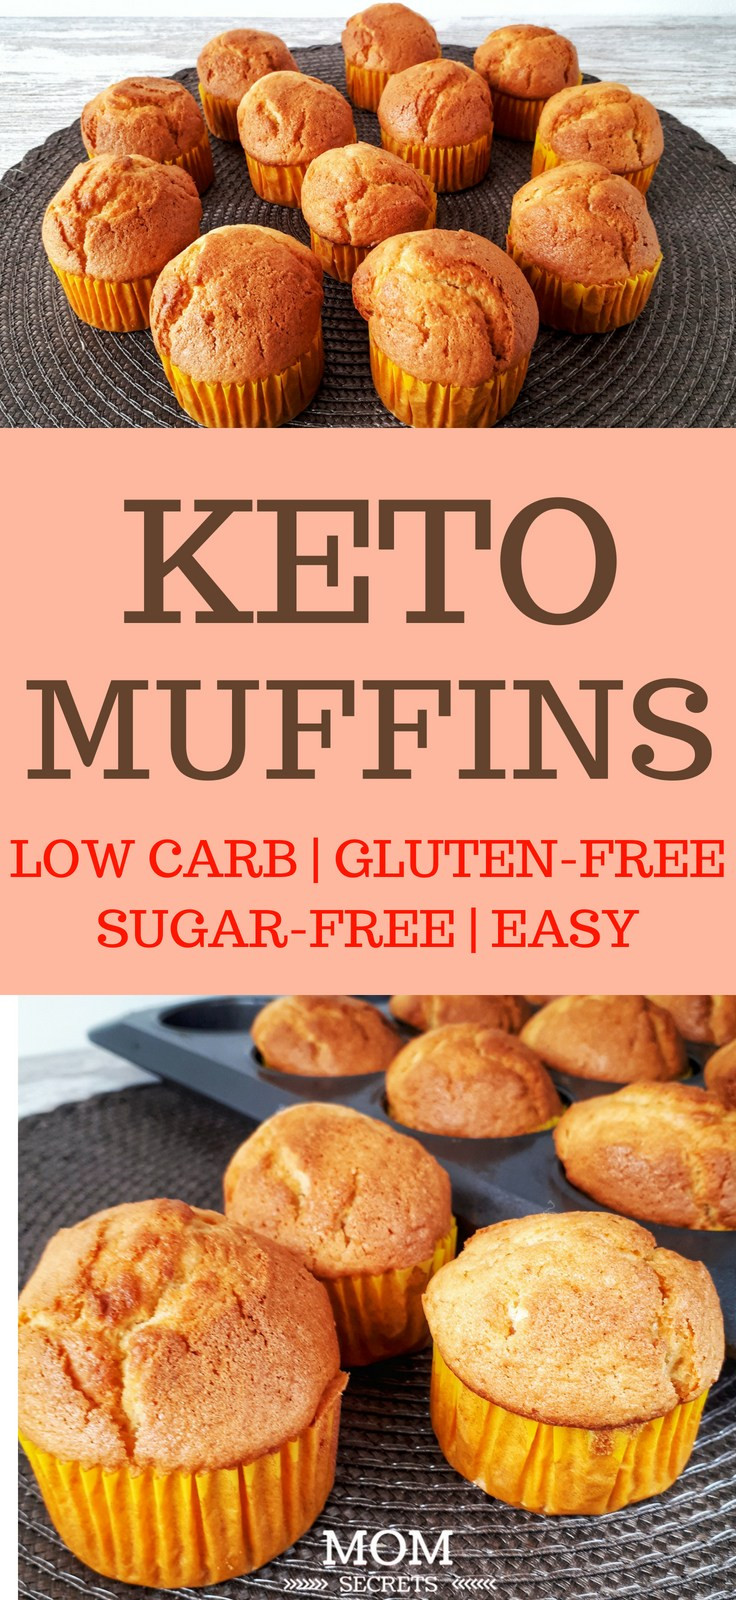 Keto Breakfast Recipes On The Go
 Quick Keto Breakfast the Go 15 Top Ideas for Fat